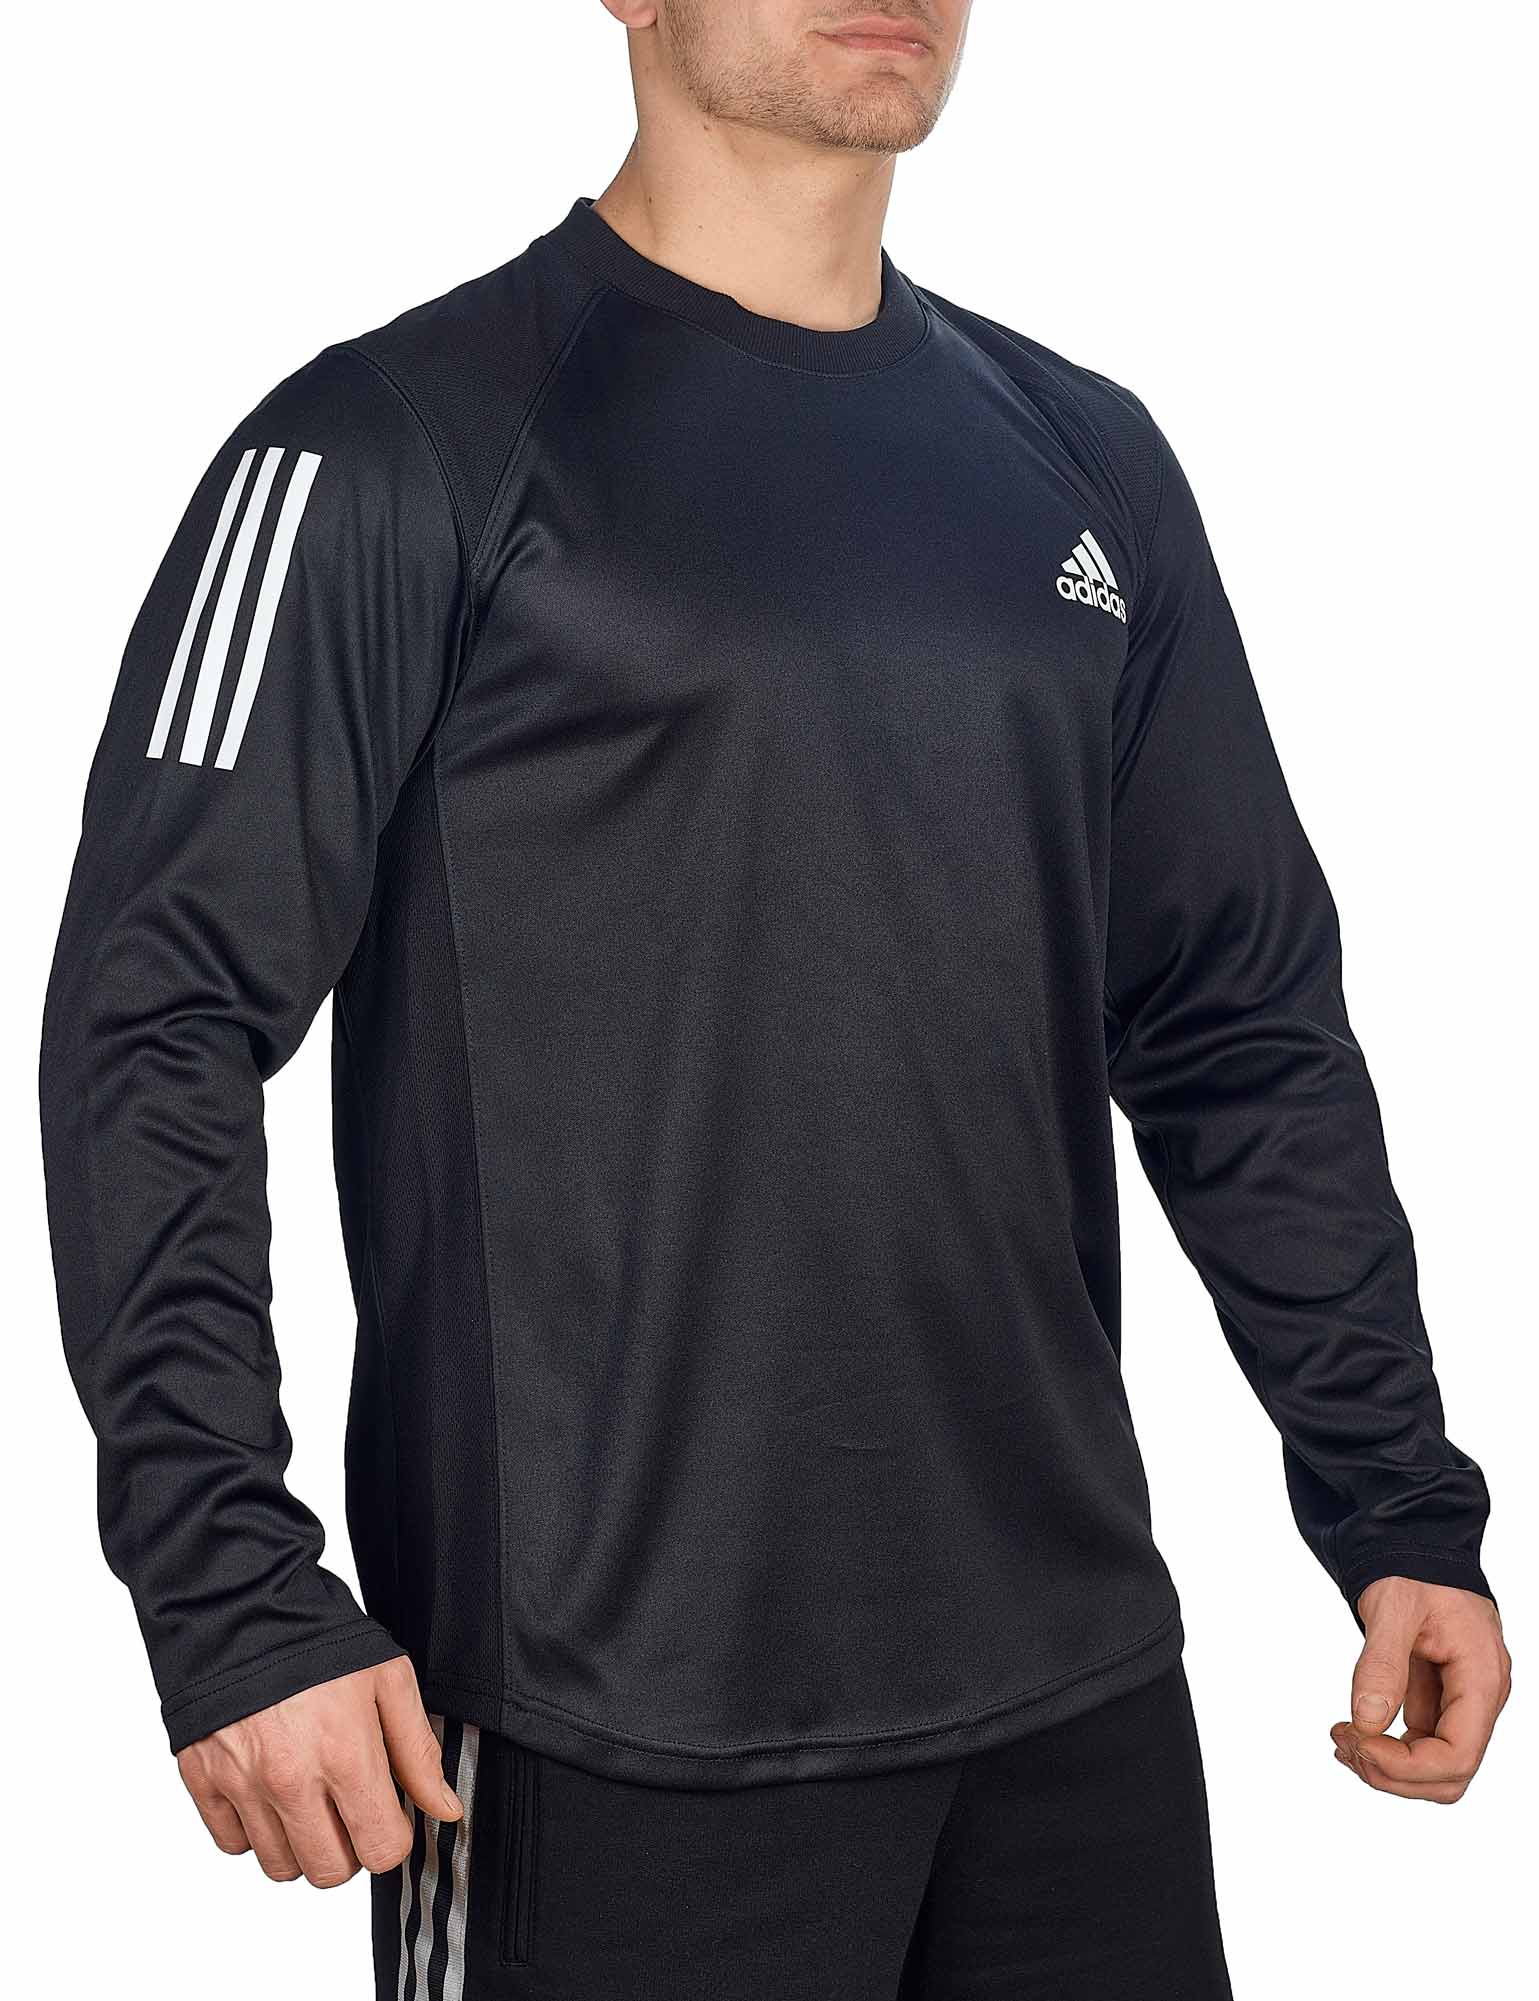 adidas Boxing Wear Tech Longsleeve Shirt, BXWTLS01